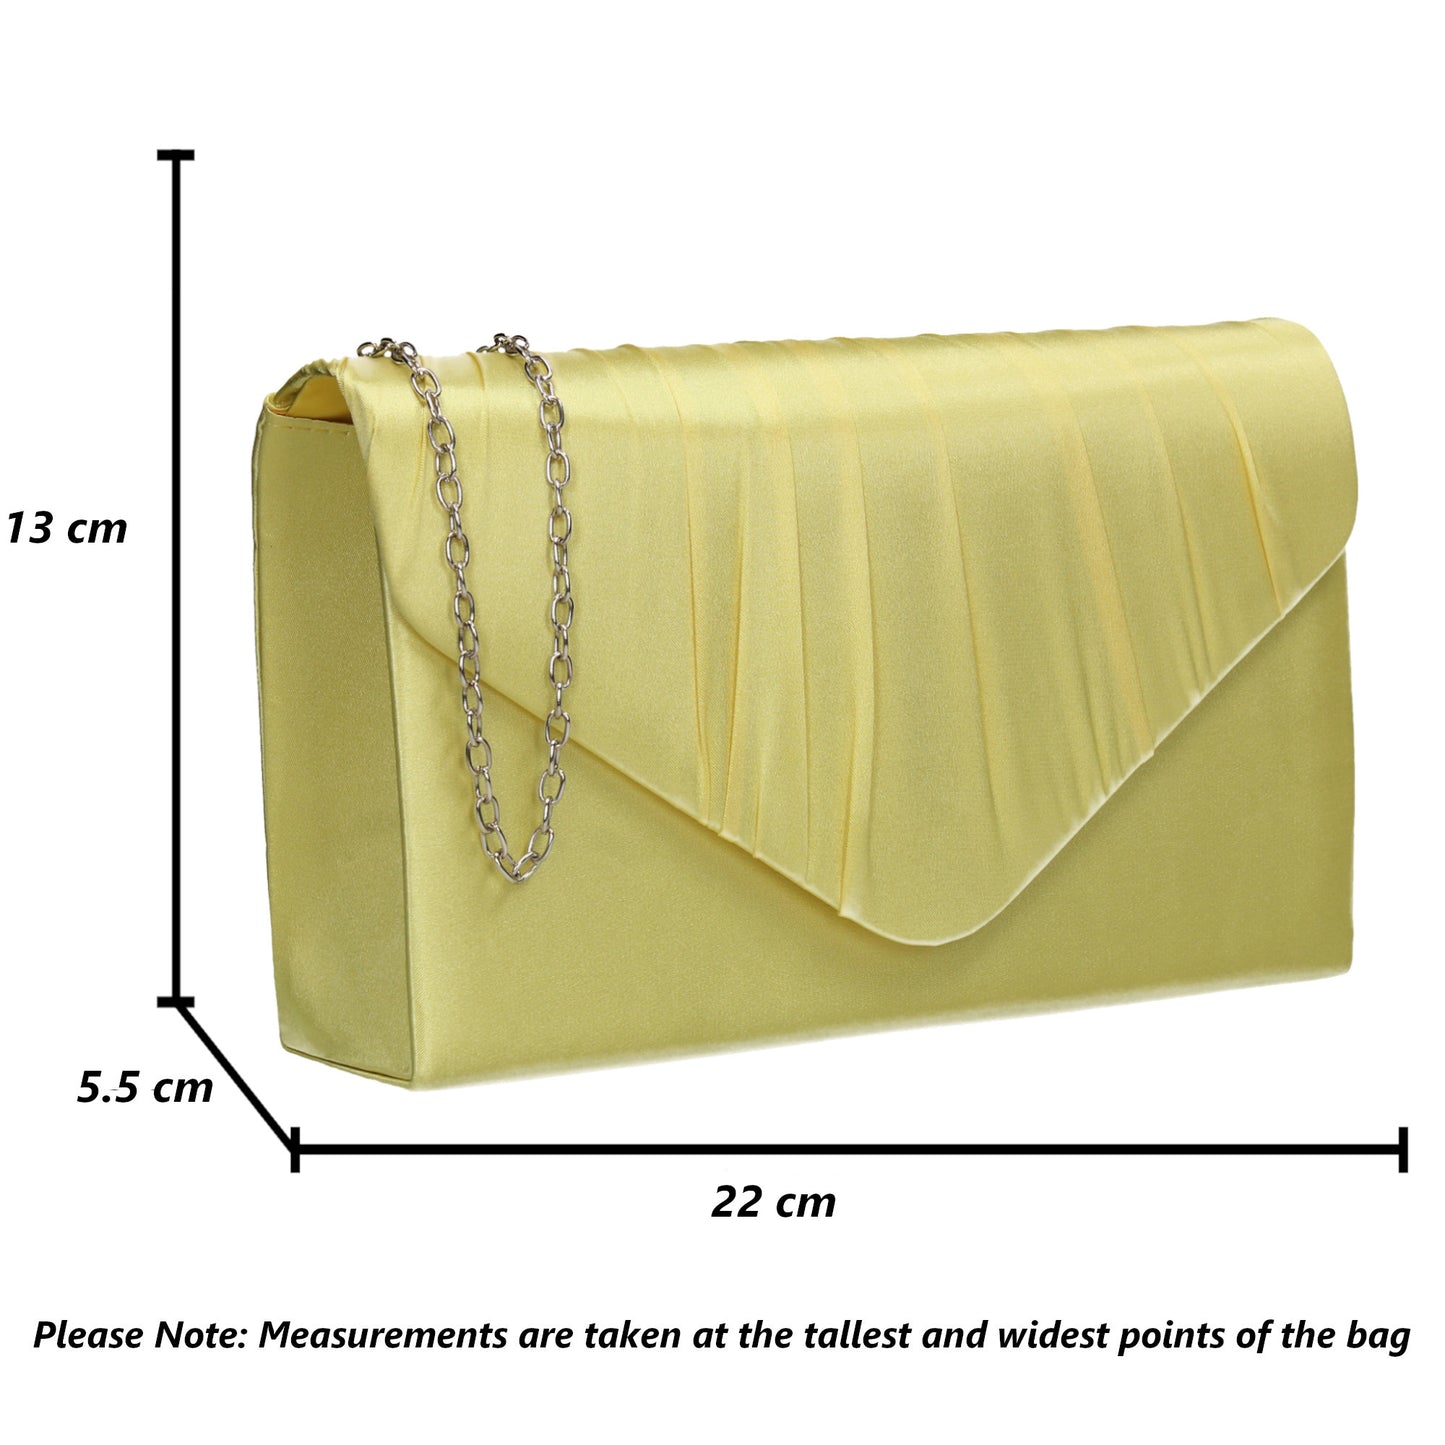 Chantel Beautiful Satin Envelope Clutch Bag Yellow